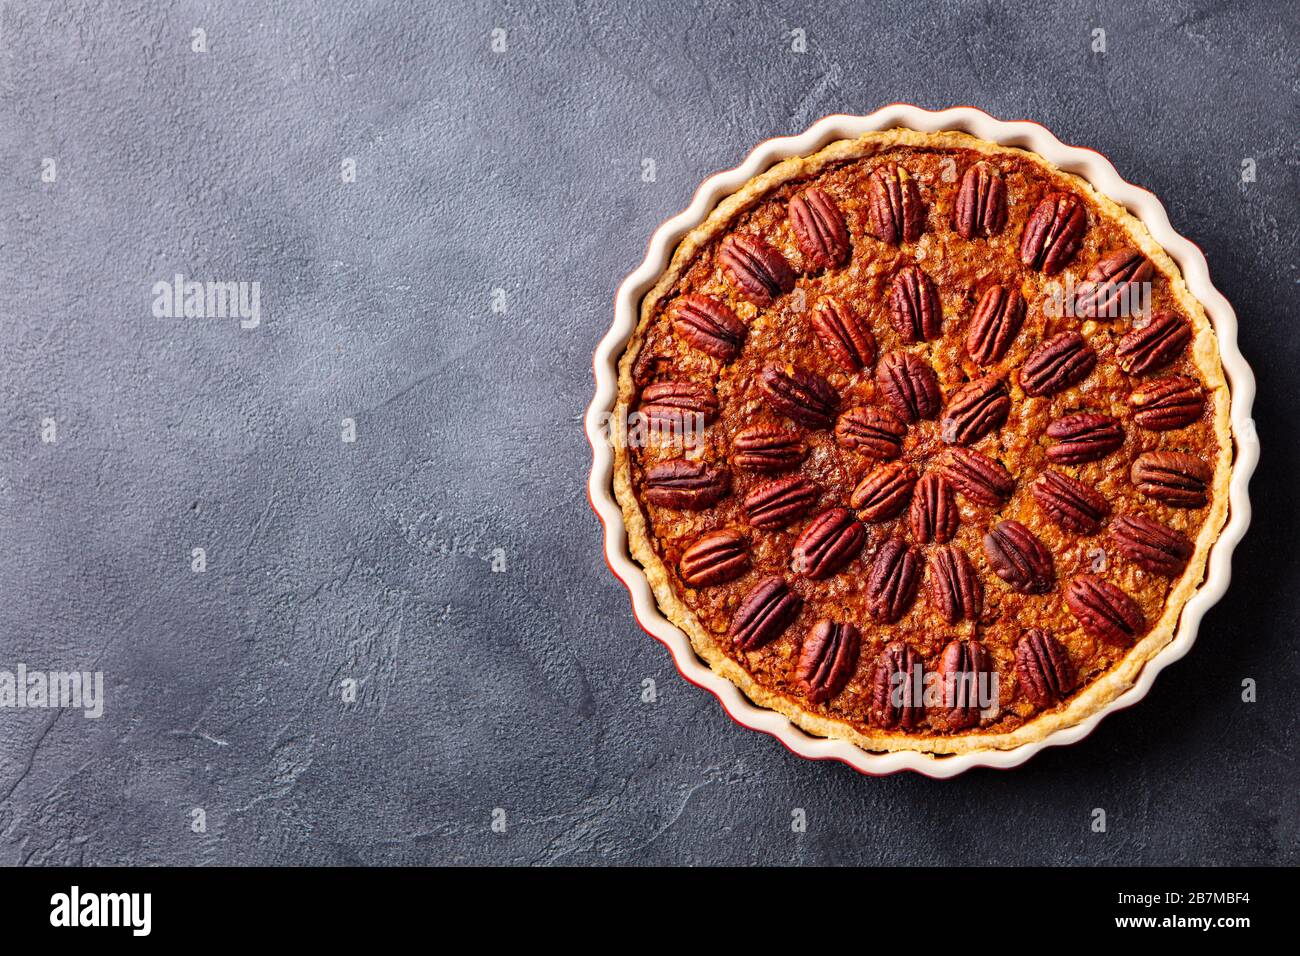 Pecan nut pie, tart in baking dish. Grey background. Copy space. Top view. Stock Photo